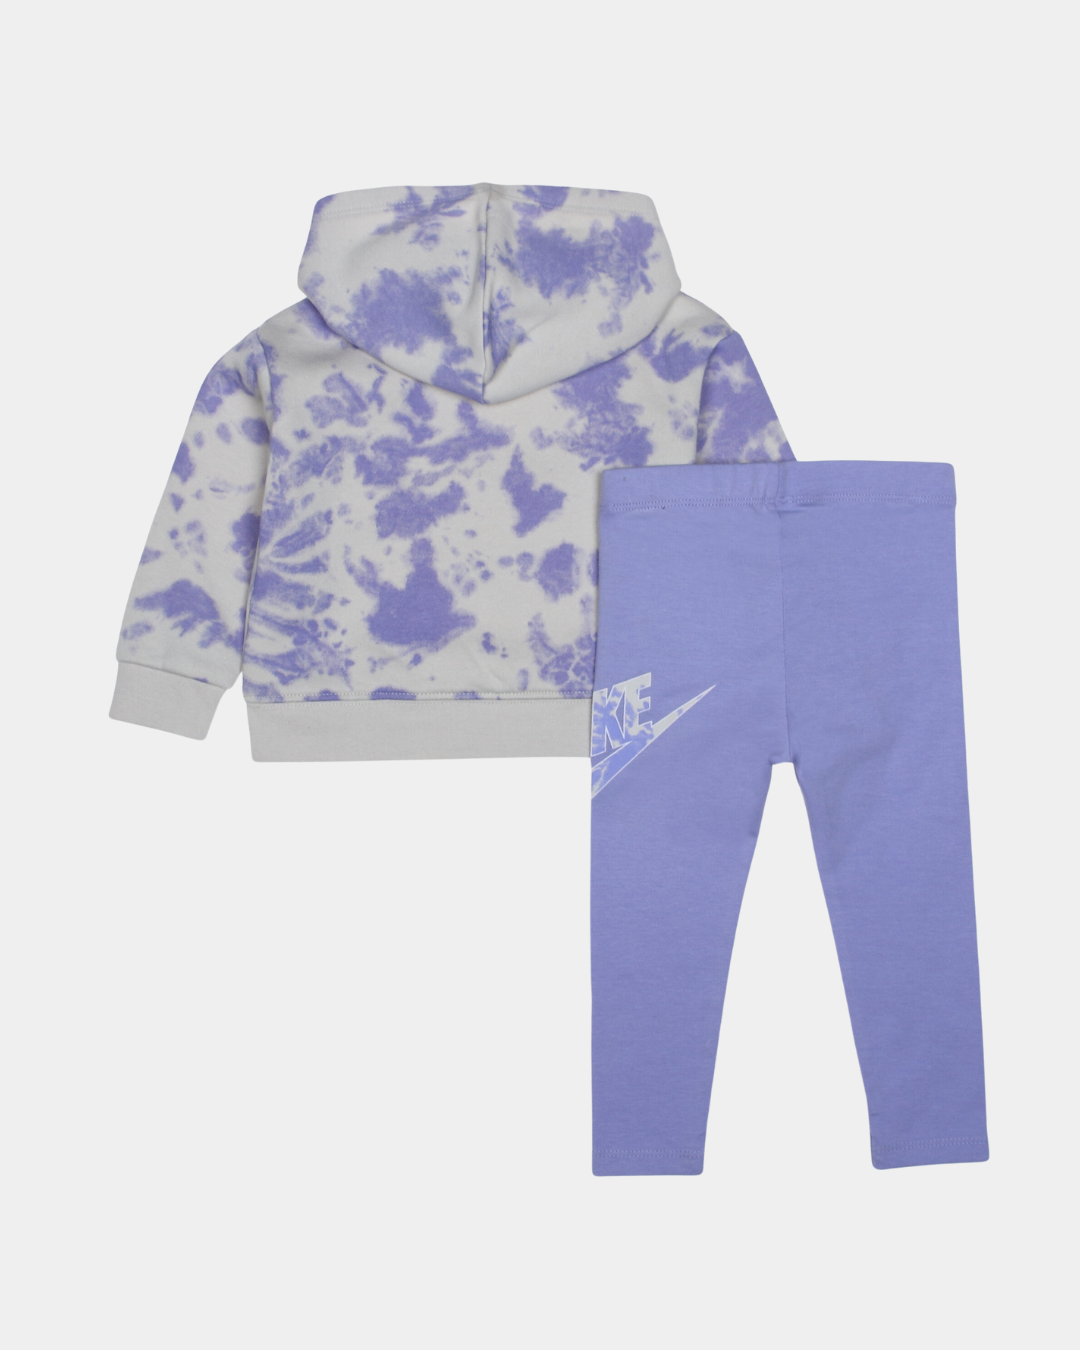 Nike Baby Set - White/Purple